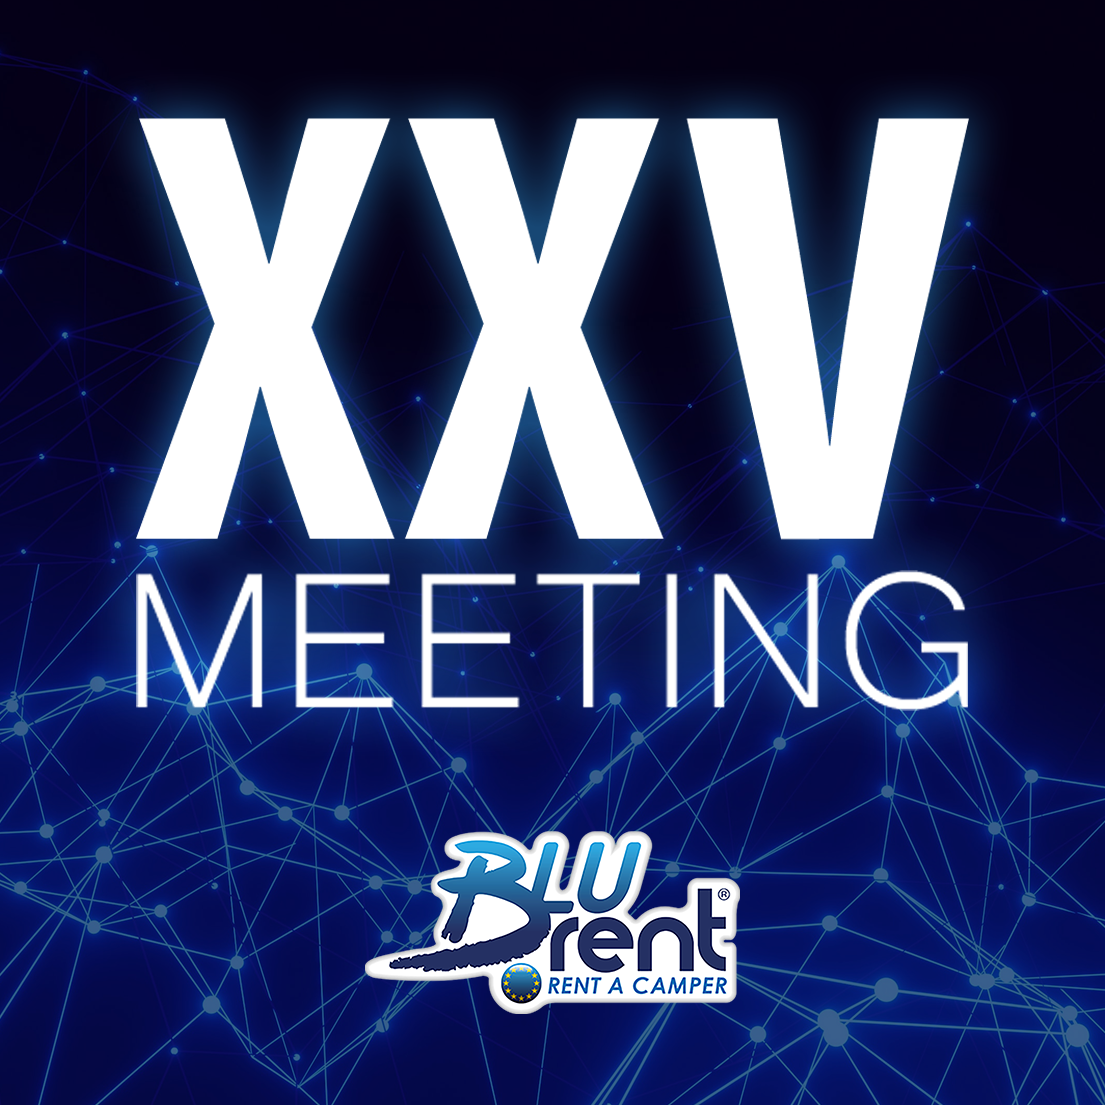 XXV Meeting Blurent